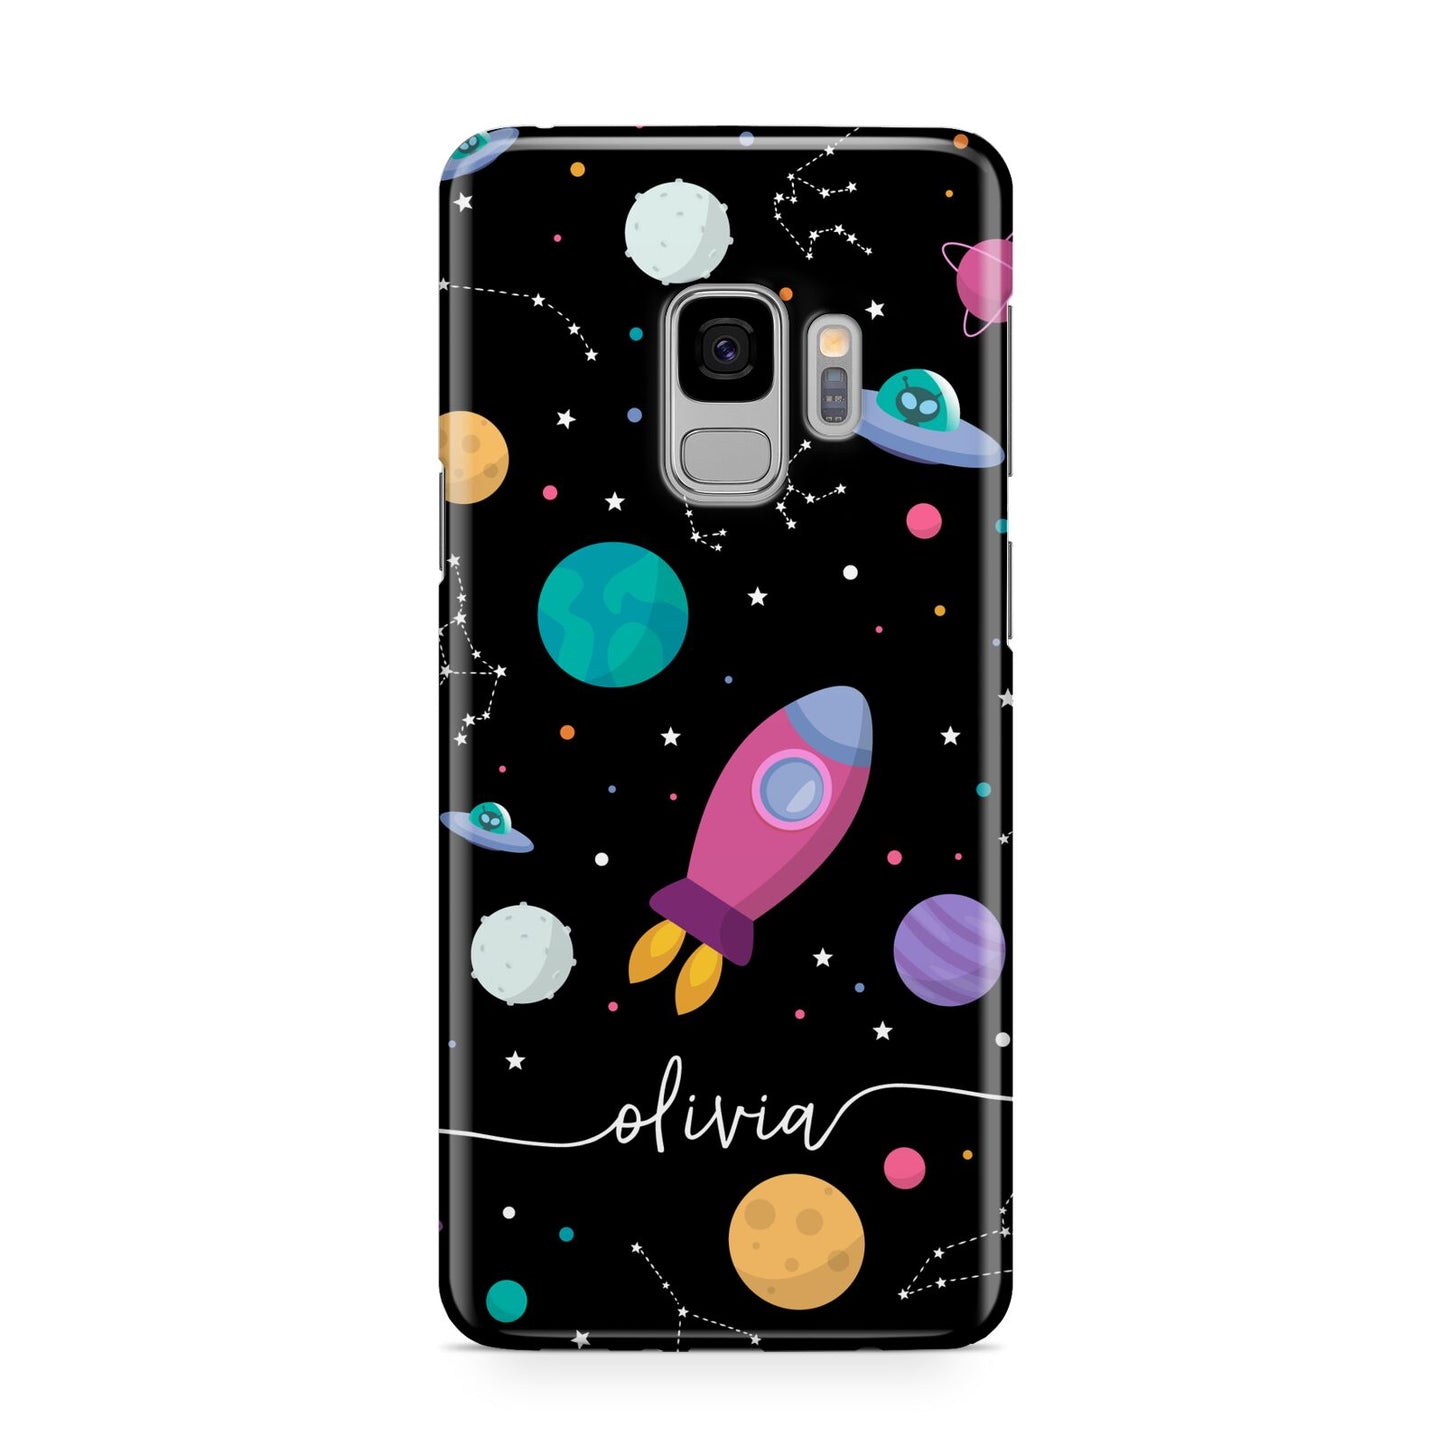 Galaxy Artwork with Name Samsung Galaxy S9 Case